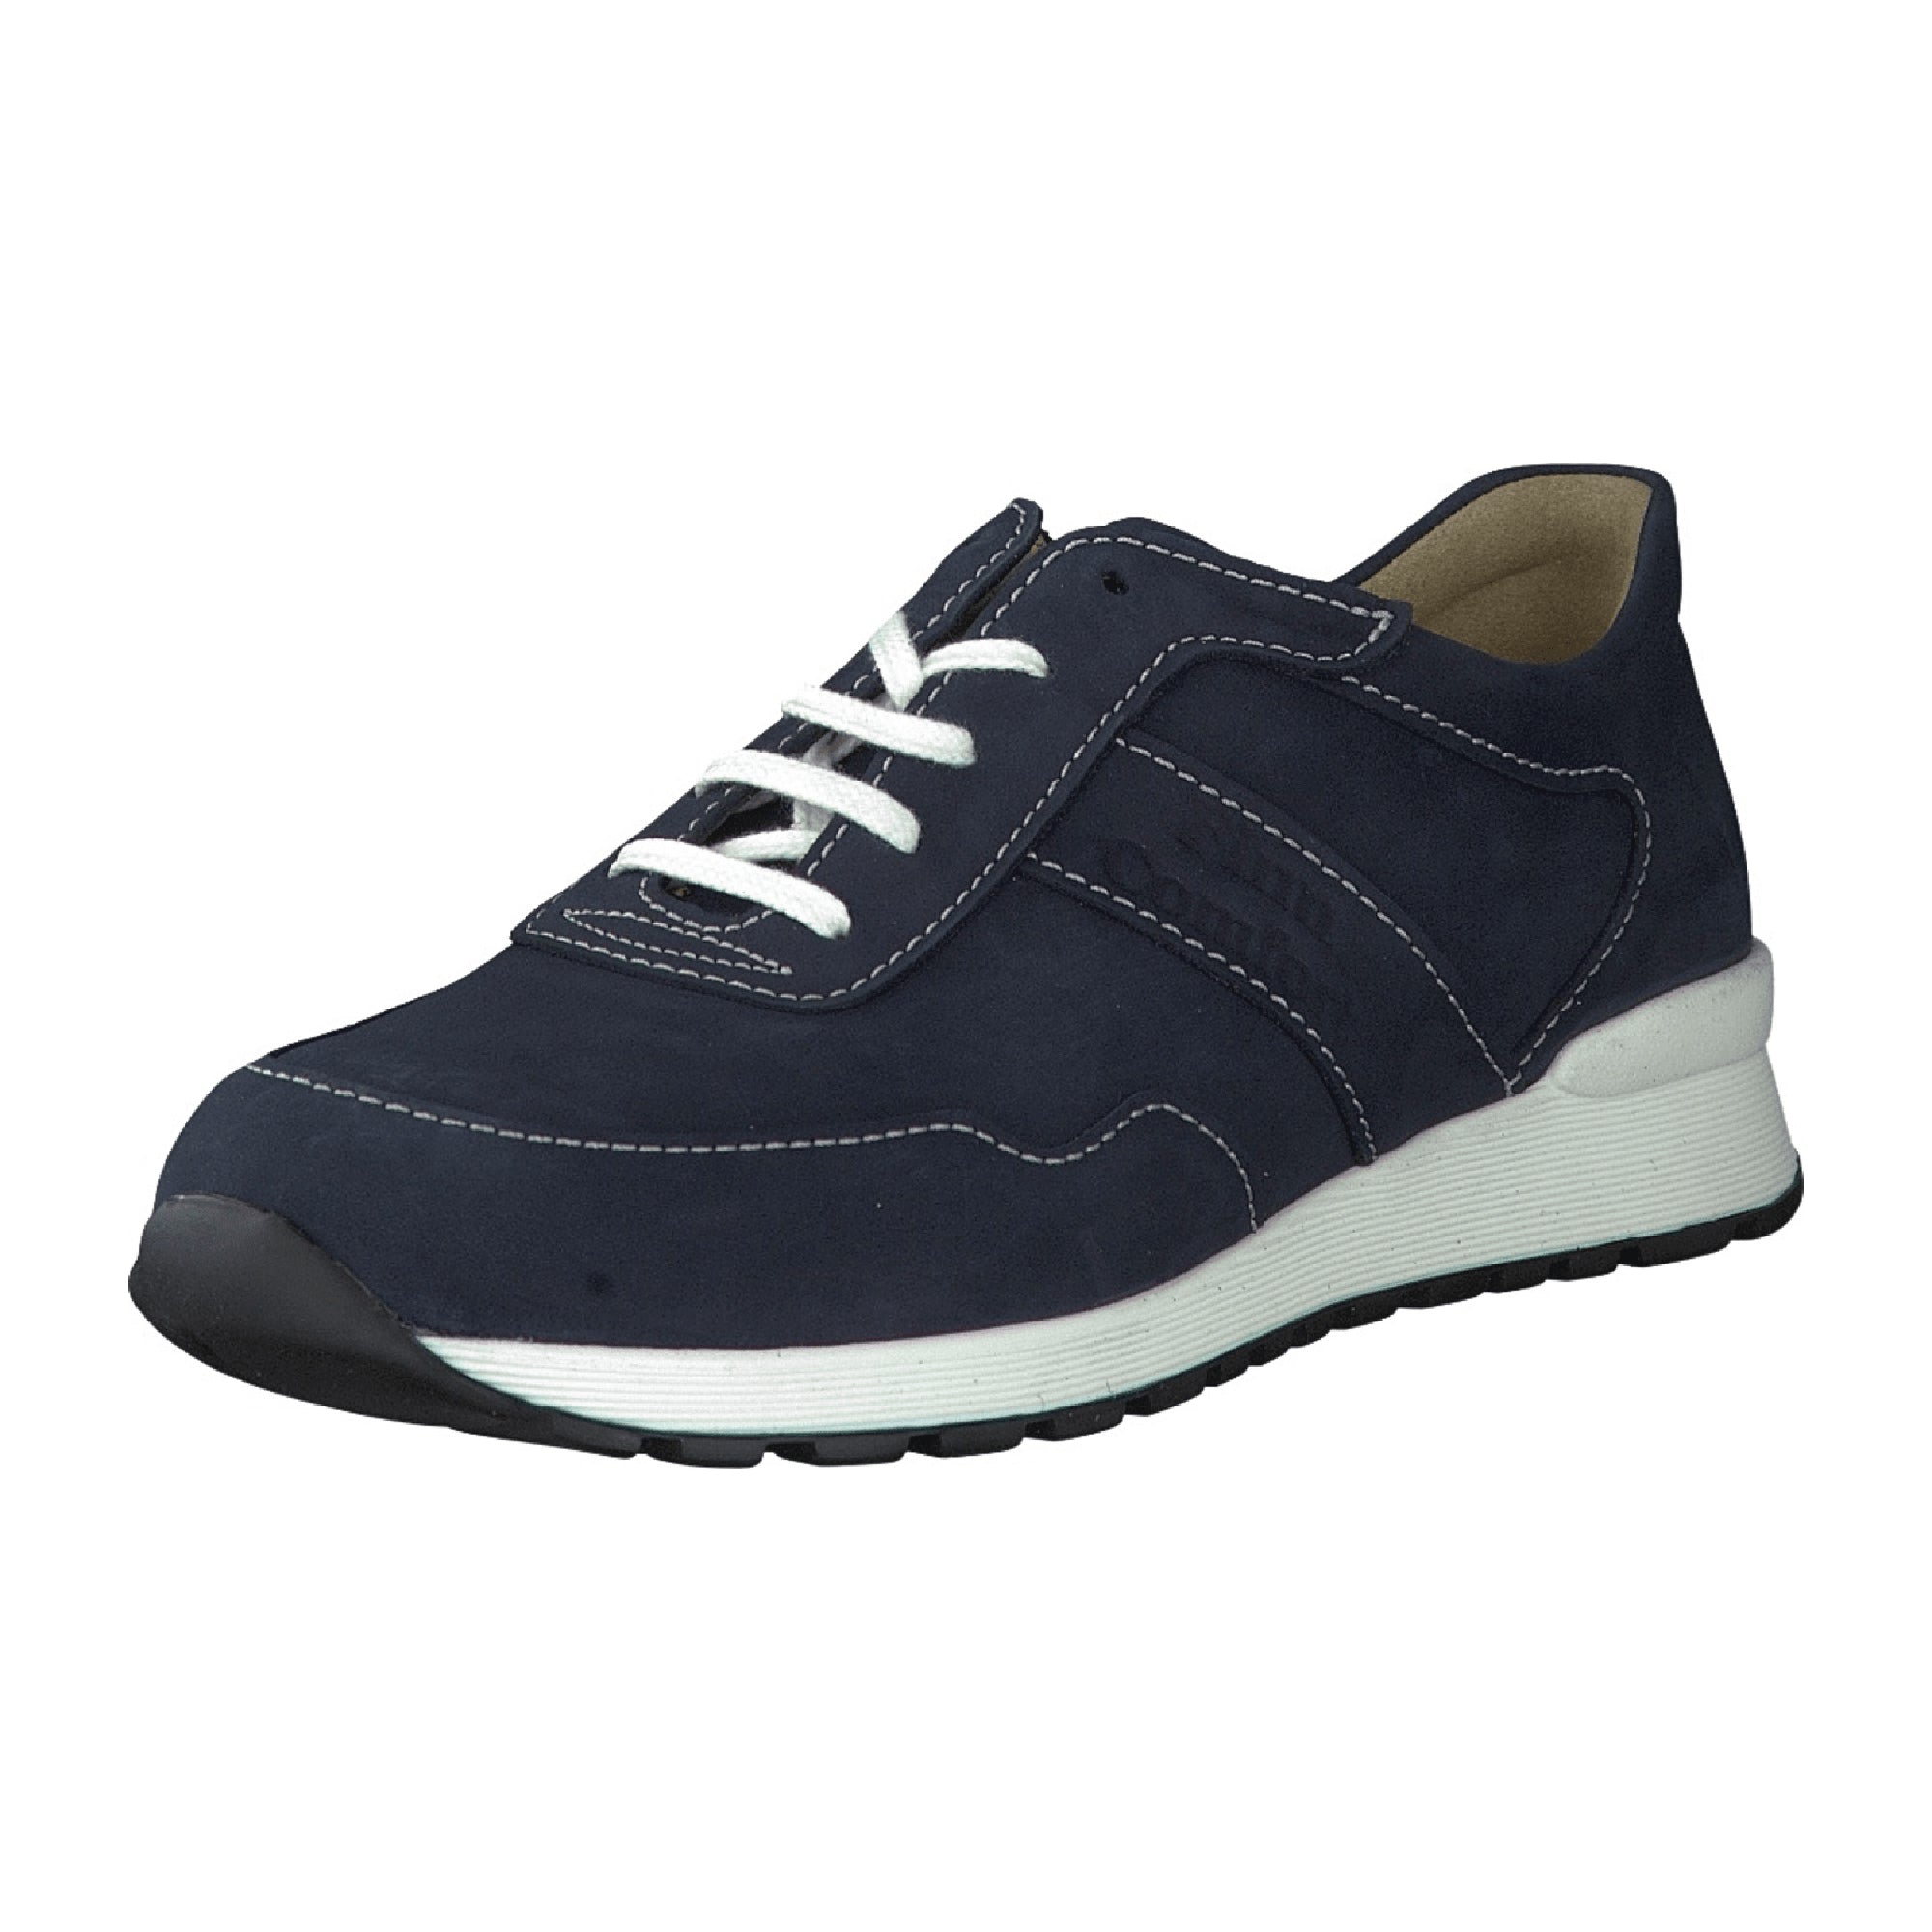 Finn Comfort Prezzo Men's Comfortable Walking Shoes - Stylish Blue